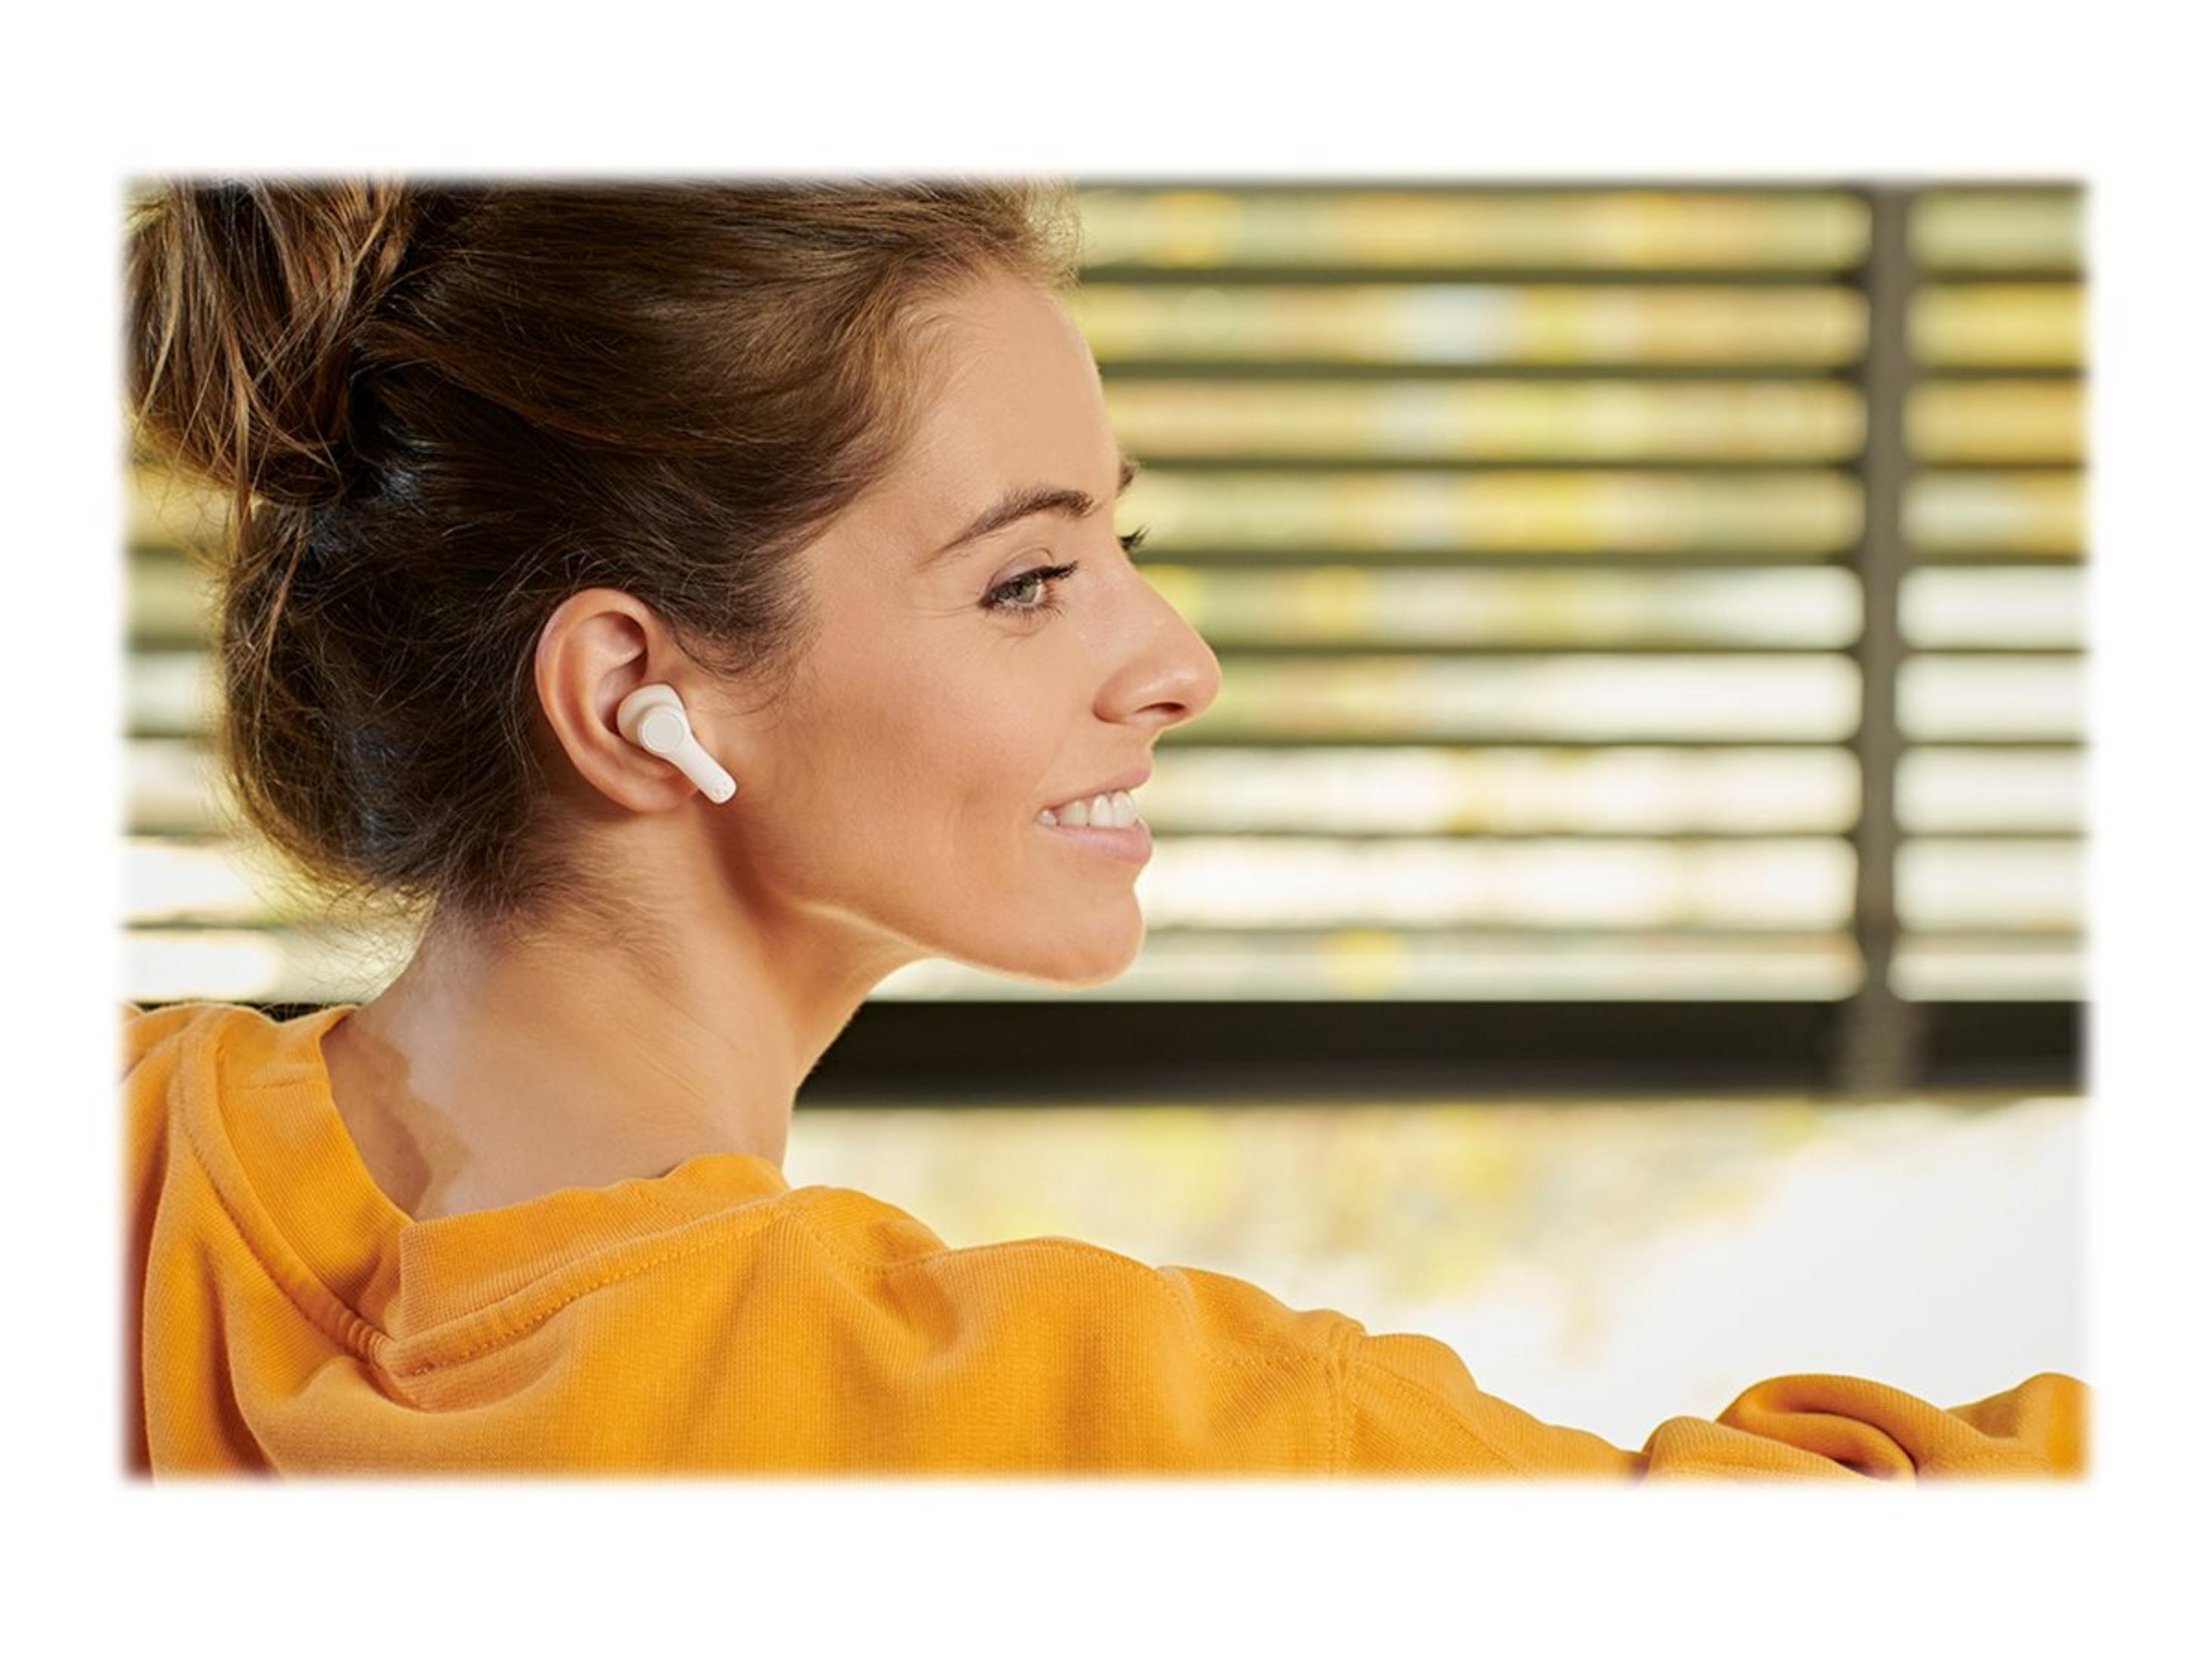 PANASONIC In-ear WDE-W WEISS, Bluetooth RZ-B Weiß 210 Kopfhörer